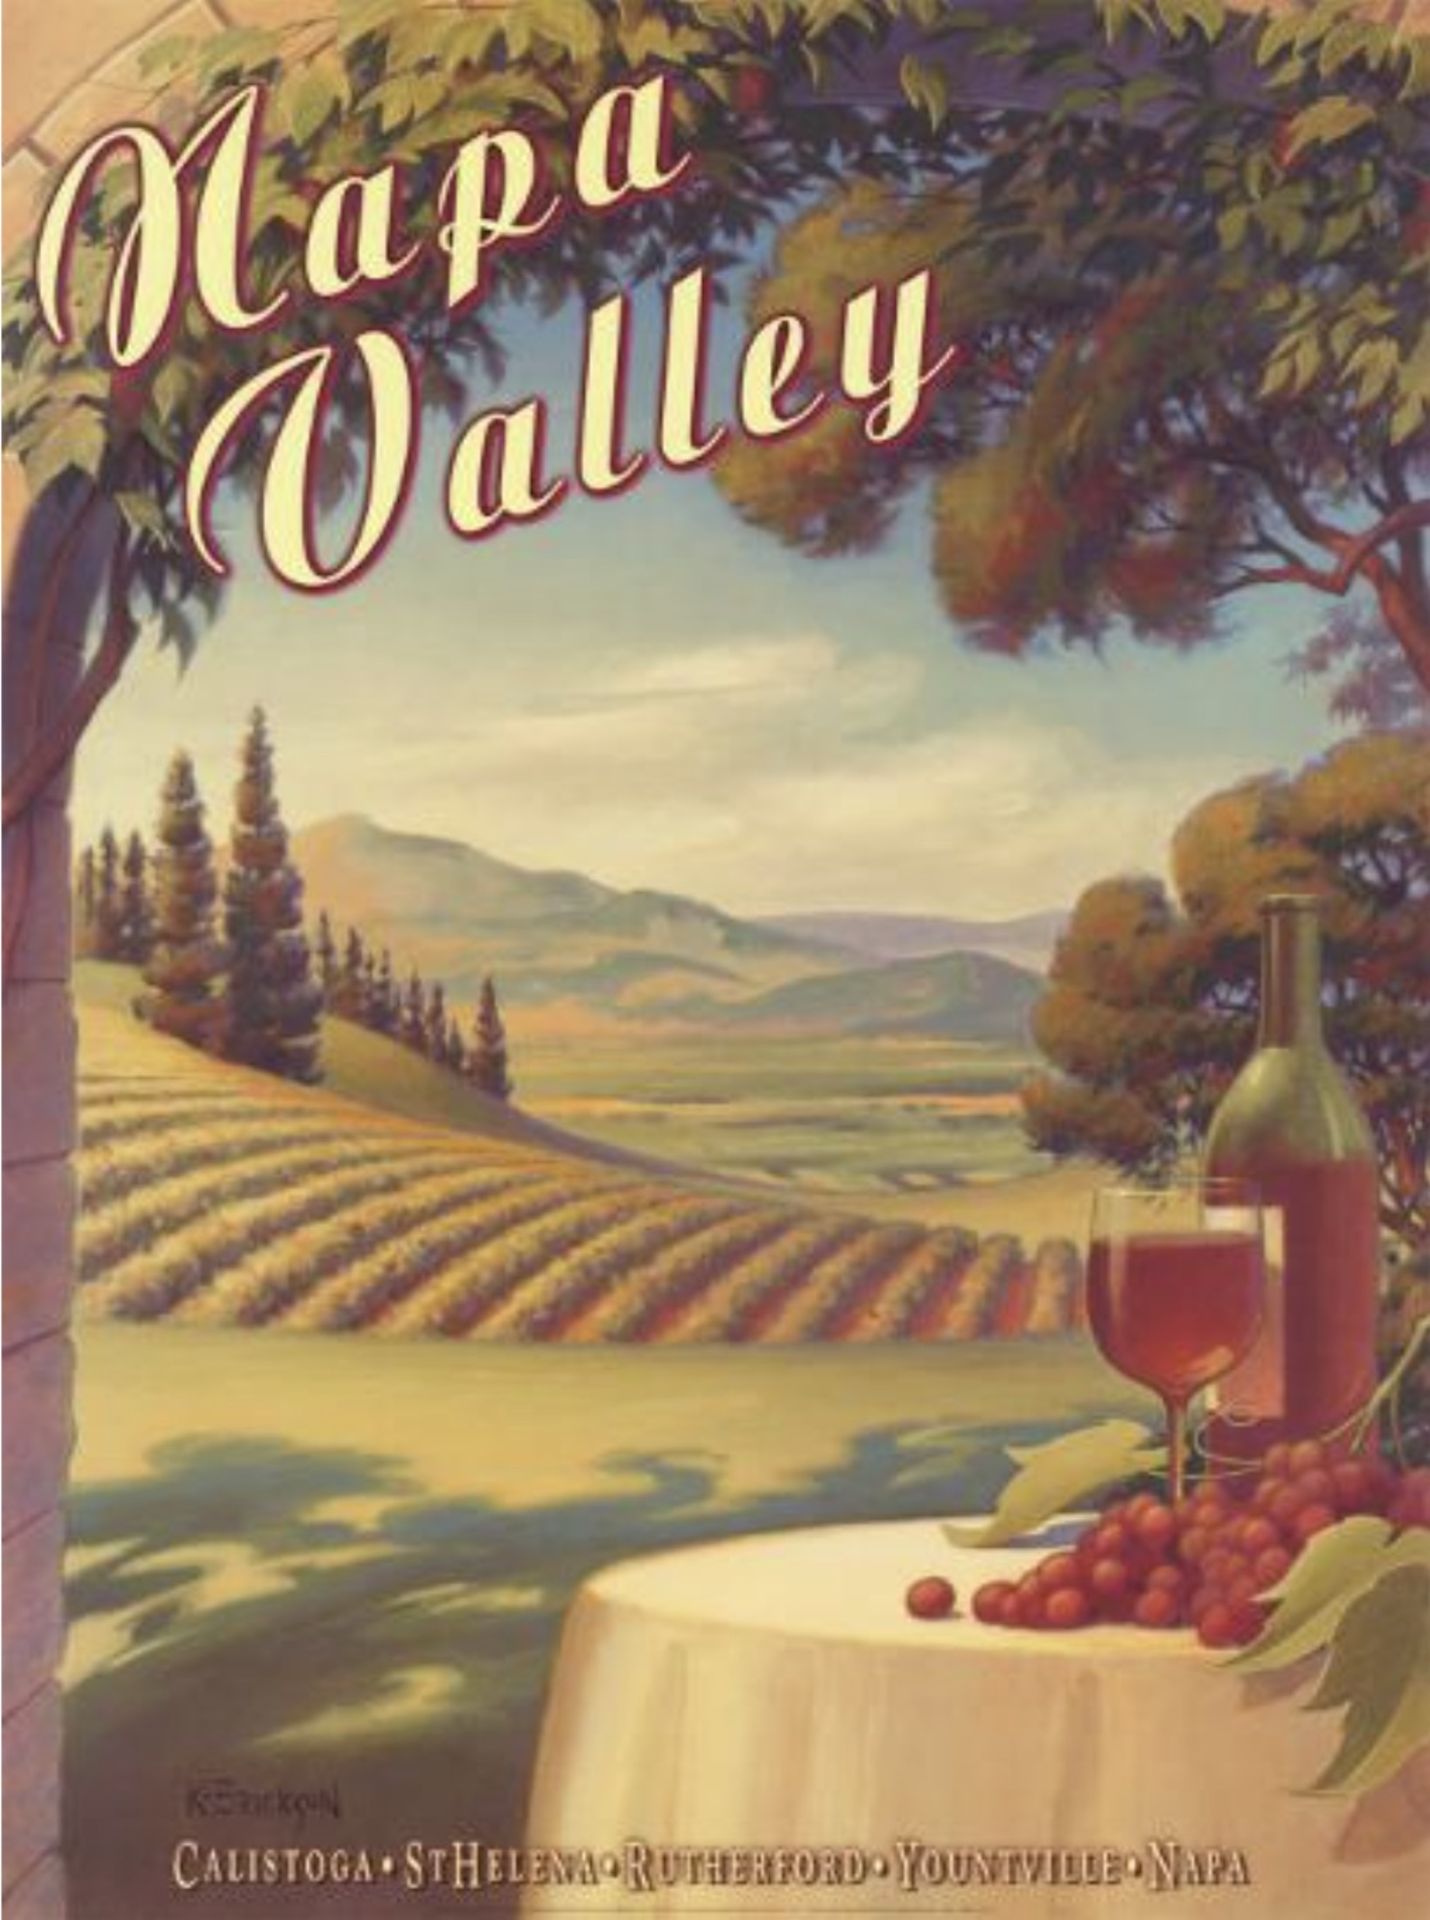 Napa Valley Poster